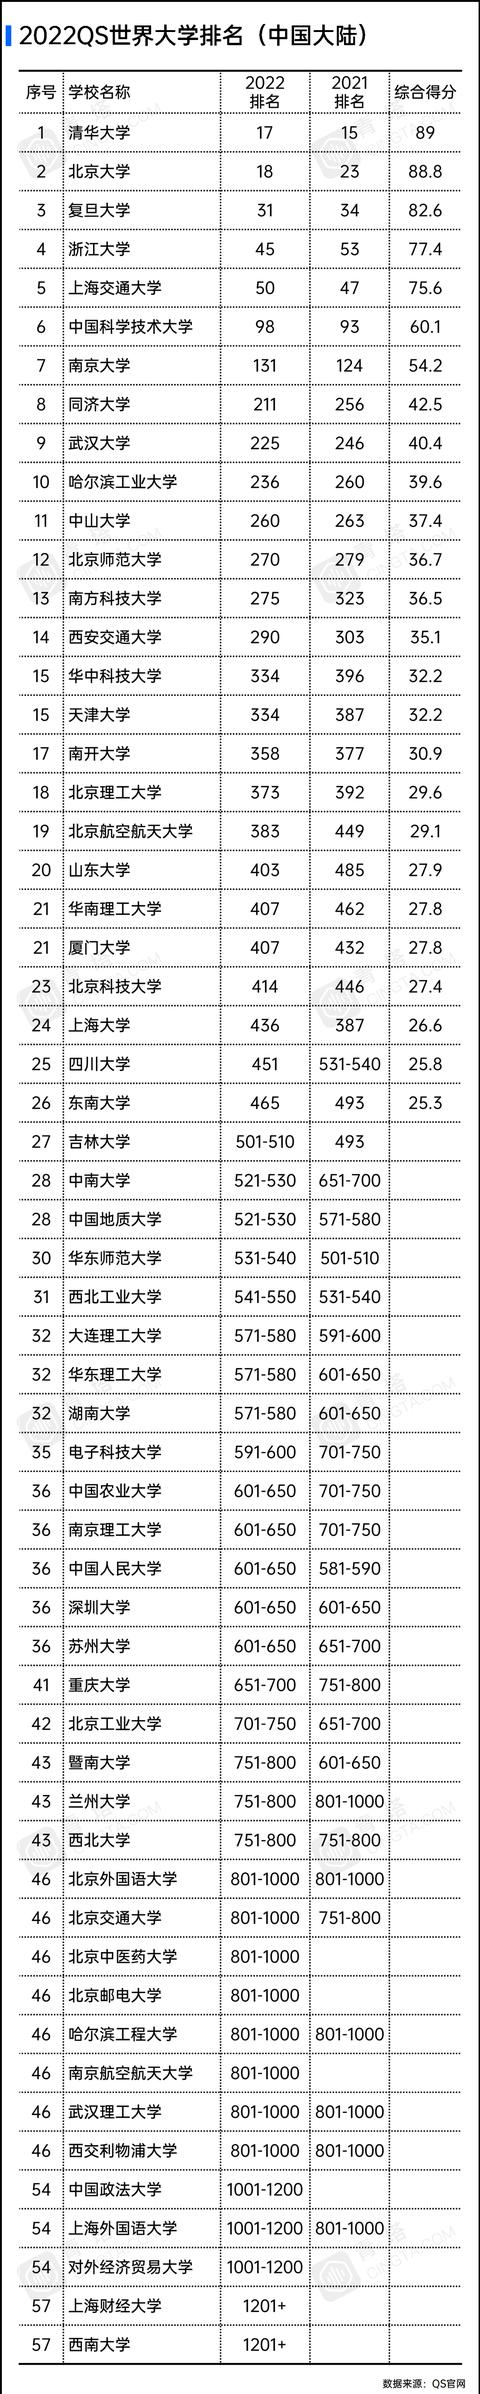 2018qs世界大学排名，中国大陆大学最新排名